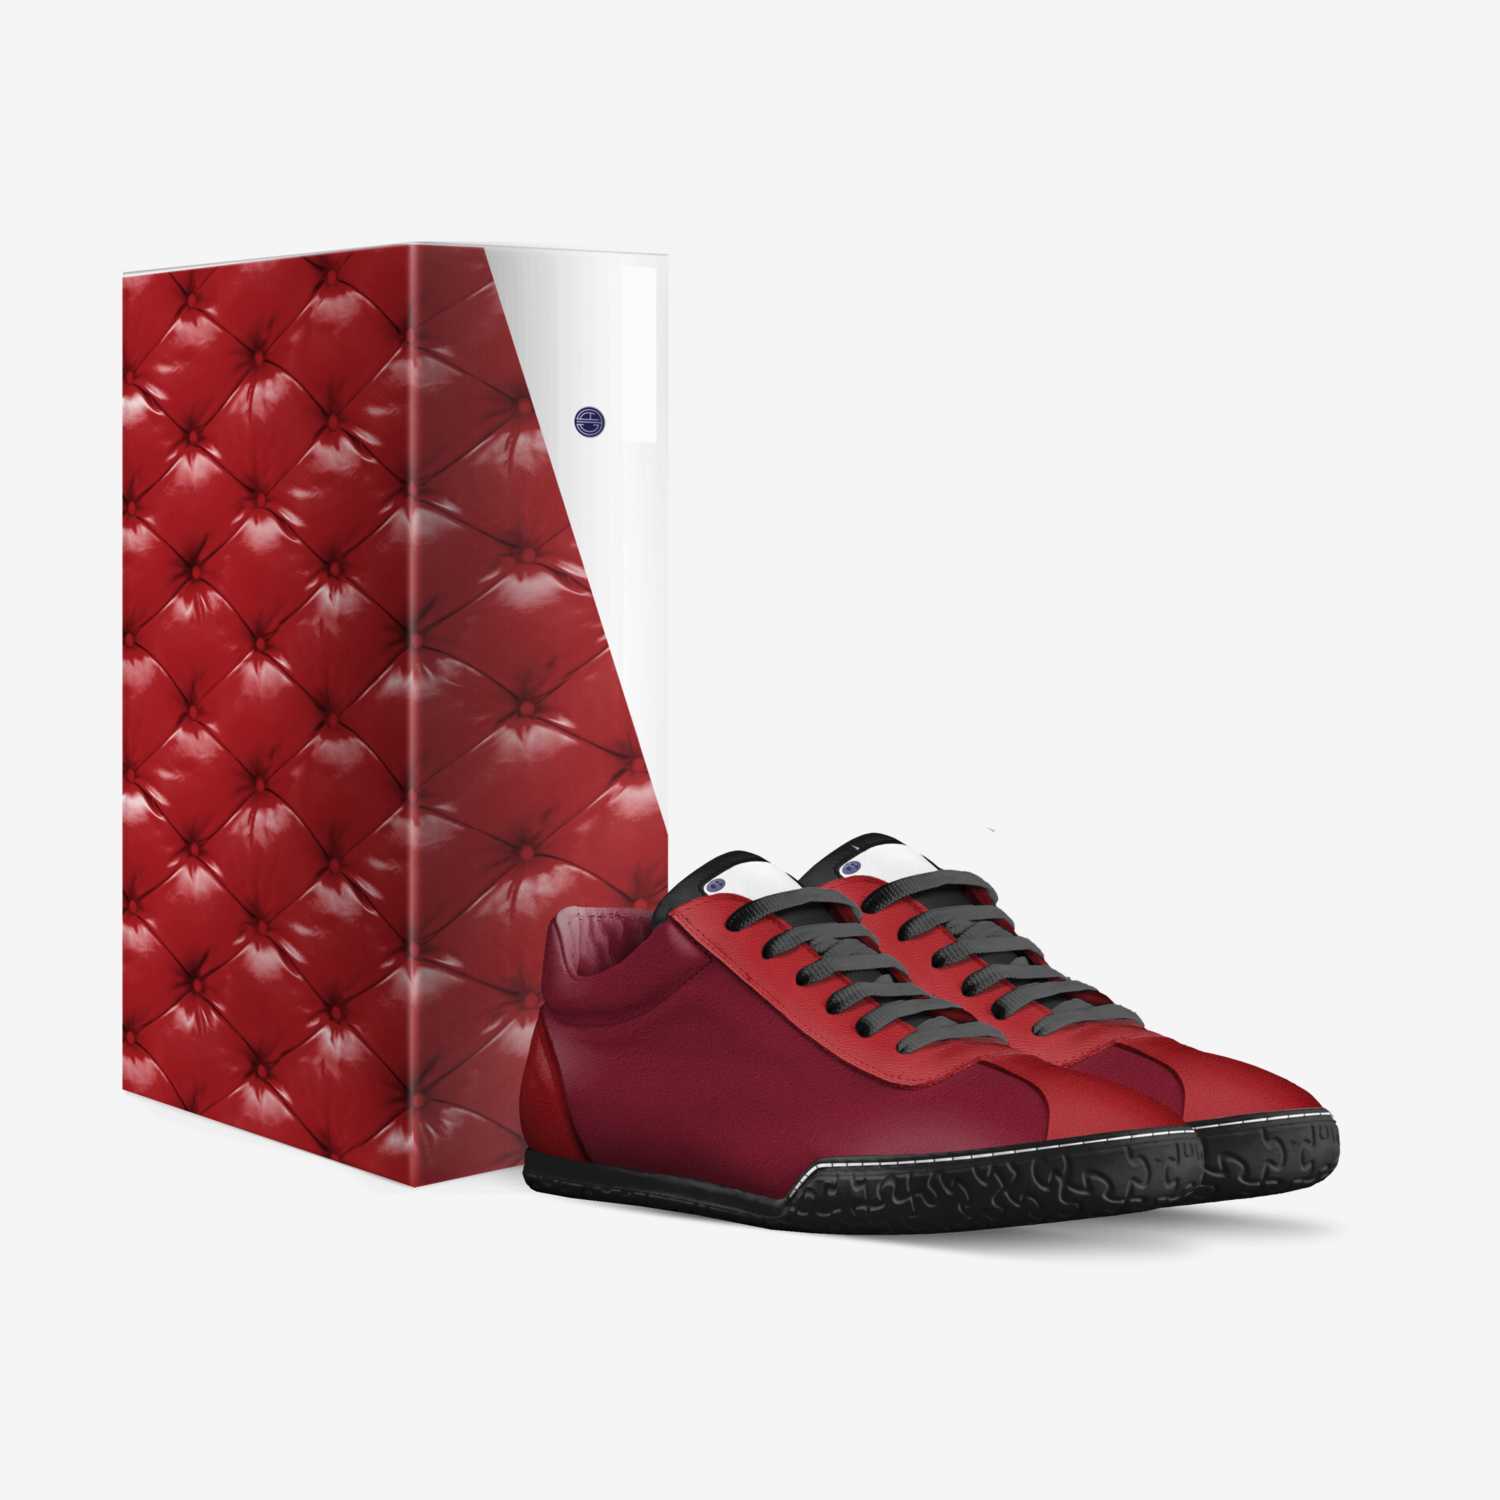 steveyg custom made in Italy shoes by Steven G | Box view